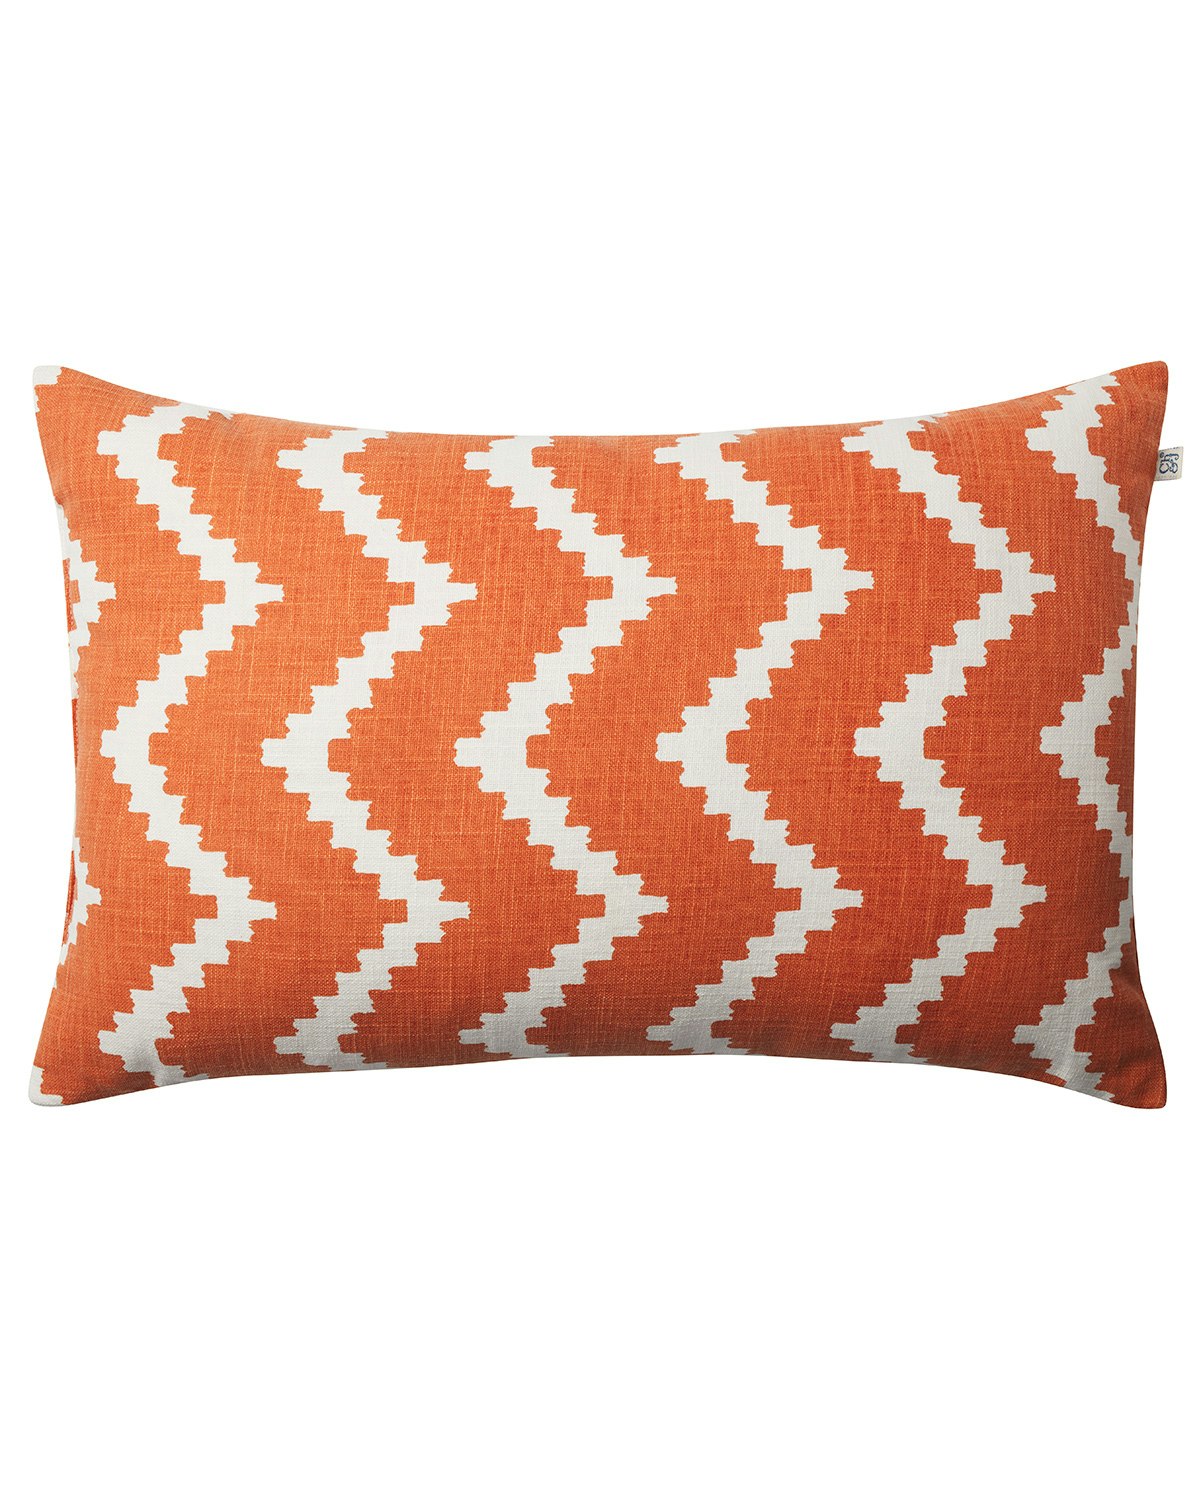 Ikat Sema Outdoor Cushion 40x60 cm, Apricot Orange